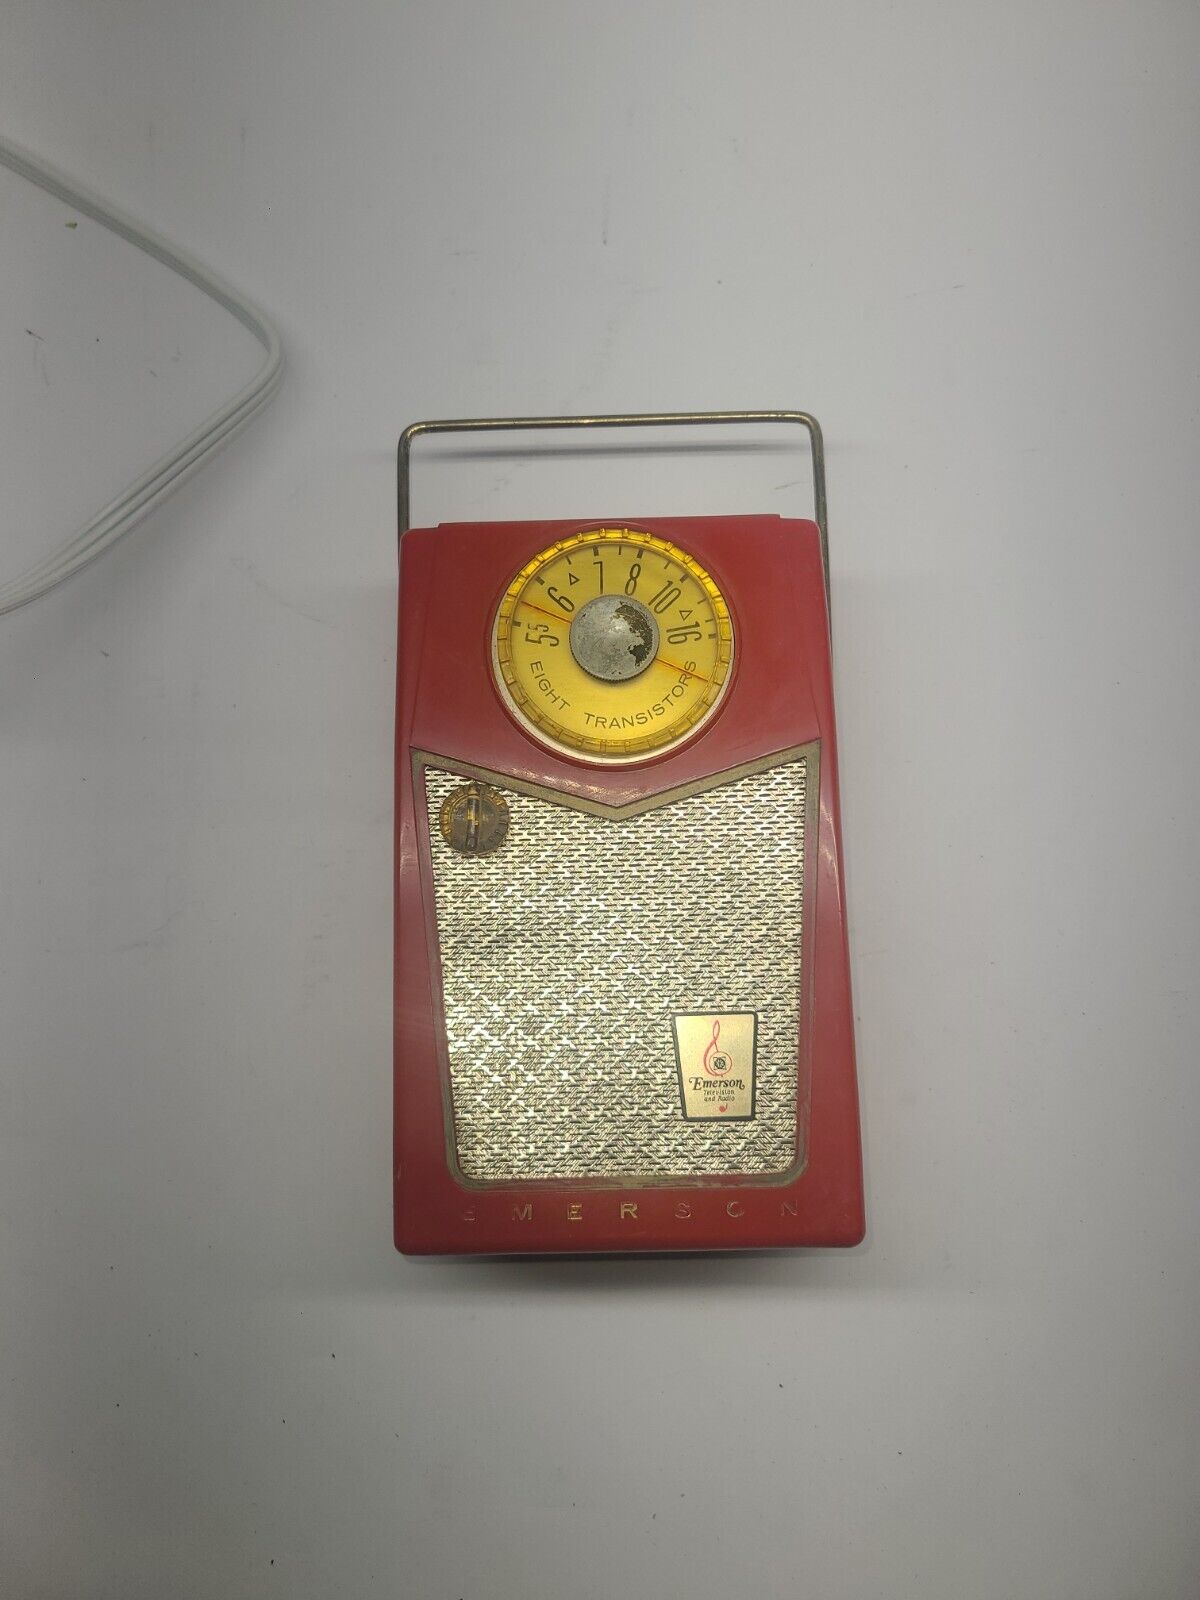 1957 Emerson 8 Transistor Radio Model 888 